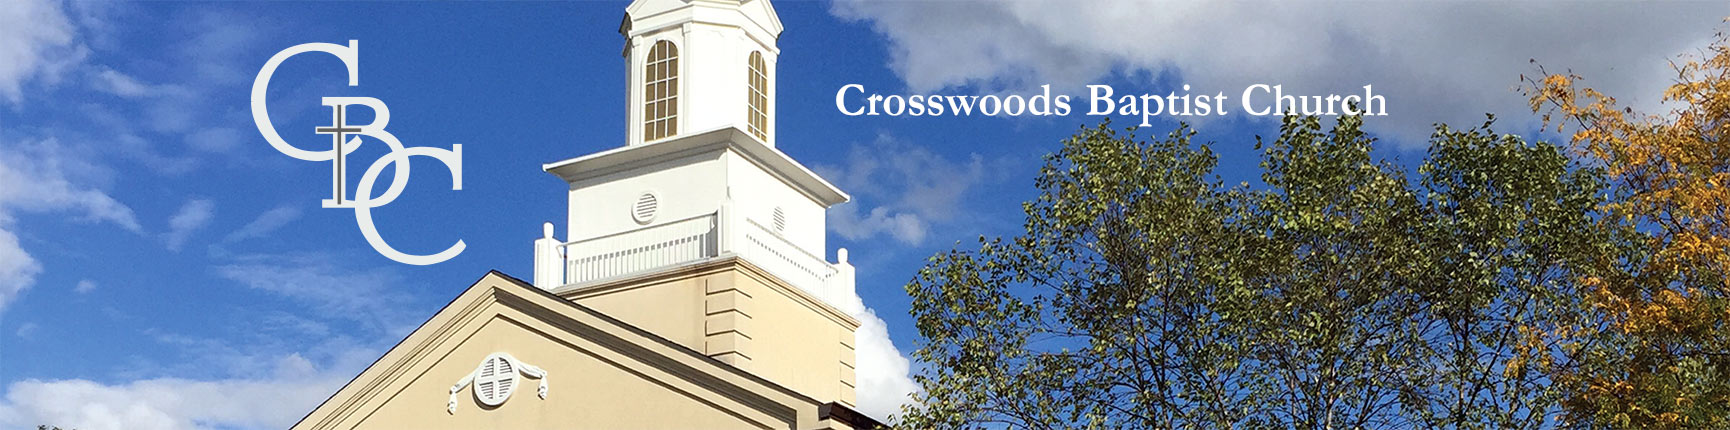 Crosswoods Baptist Church